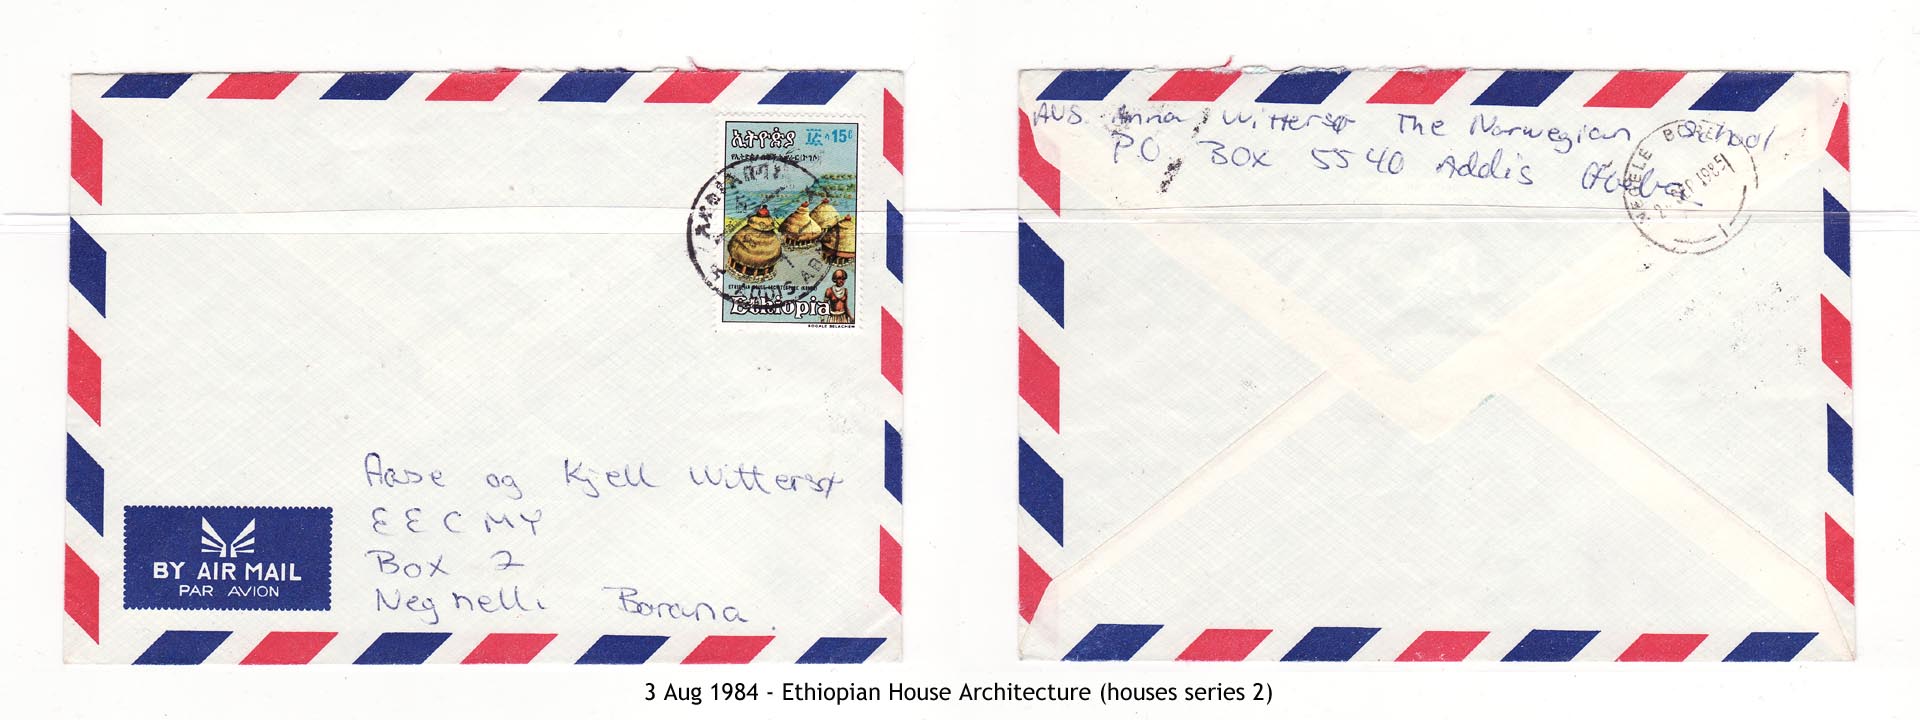 19840803 - Ethiopian House Architecture (houses series 2)